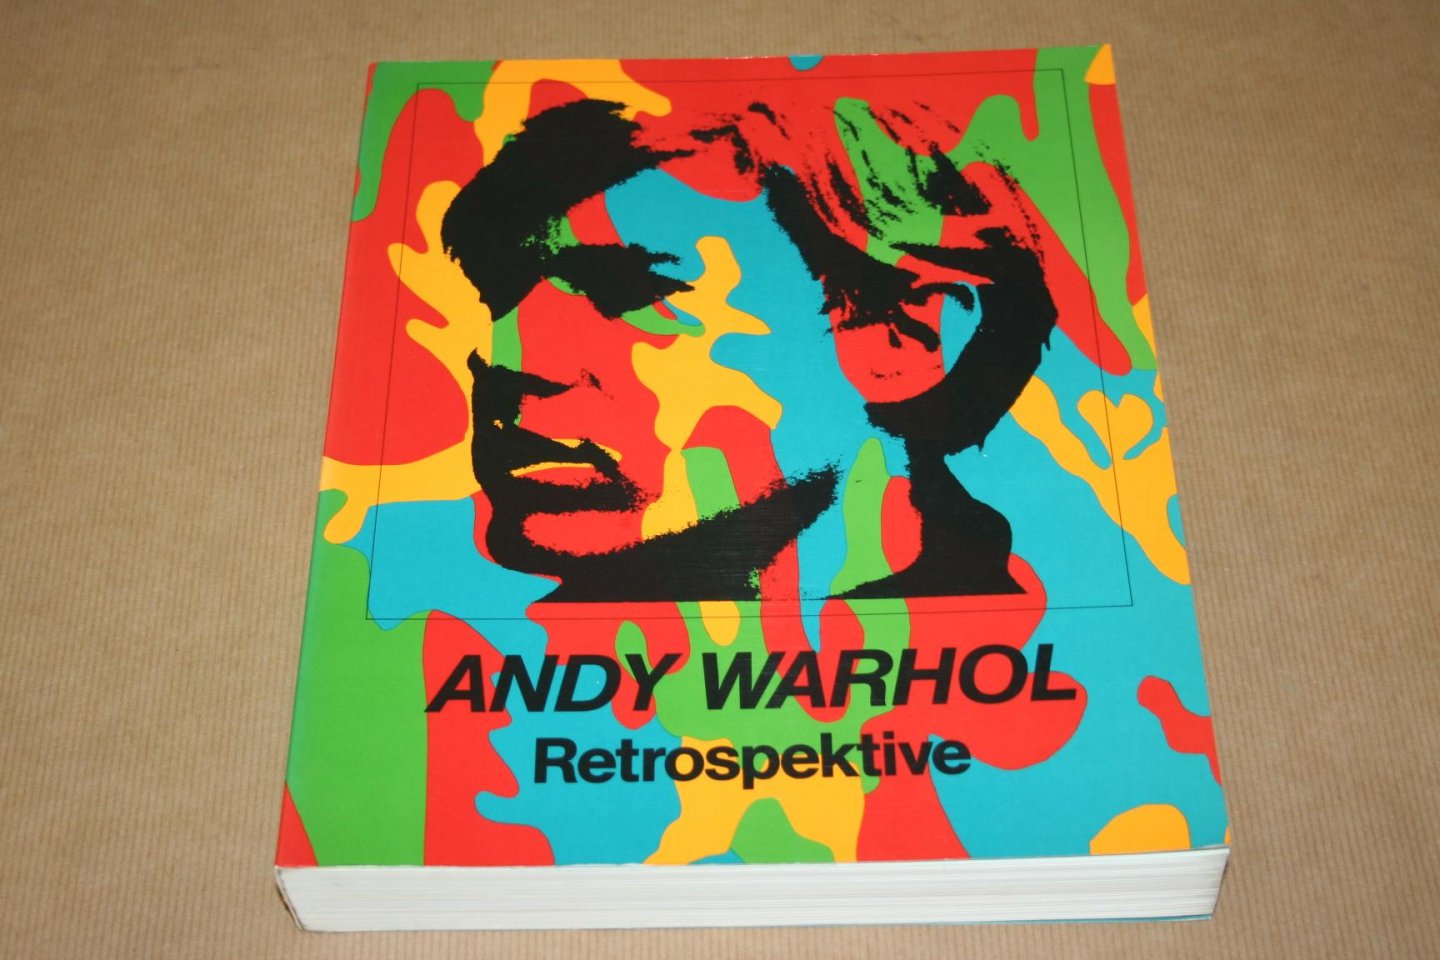 Kynaston McShine - Andy Warhol - Retrospektive  (Museum Ludwig, Köln - 1989)